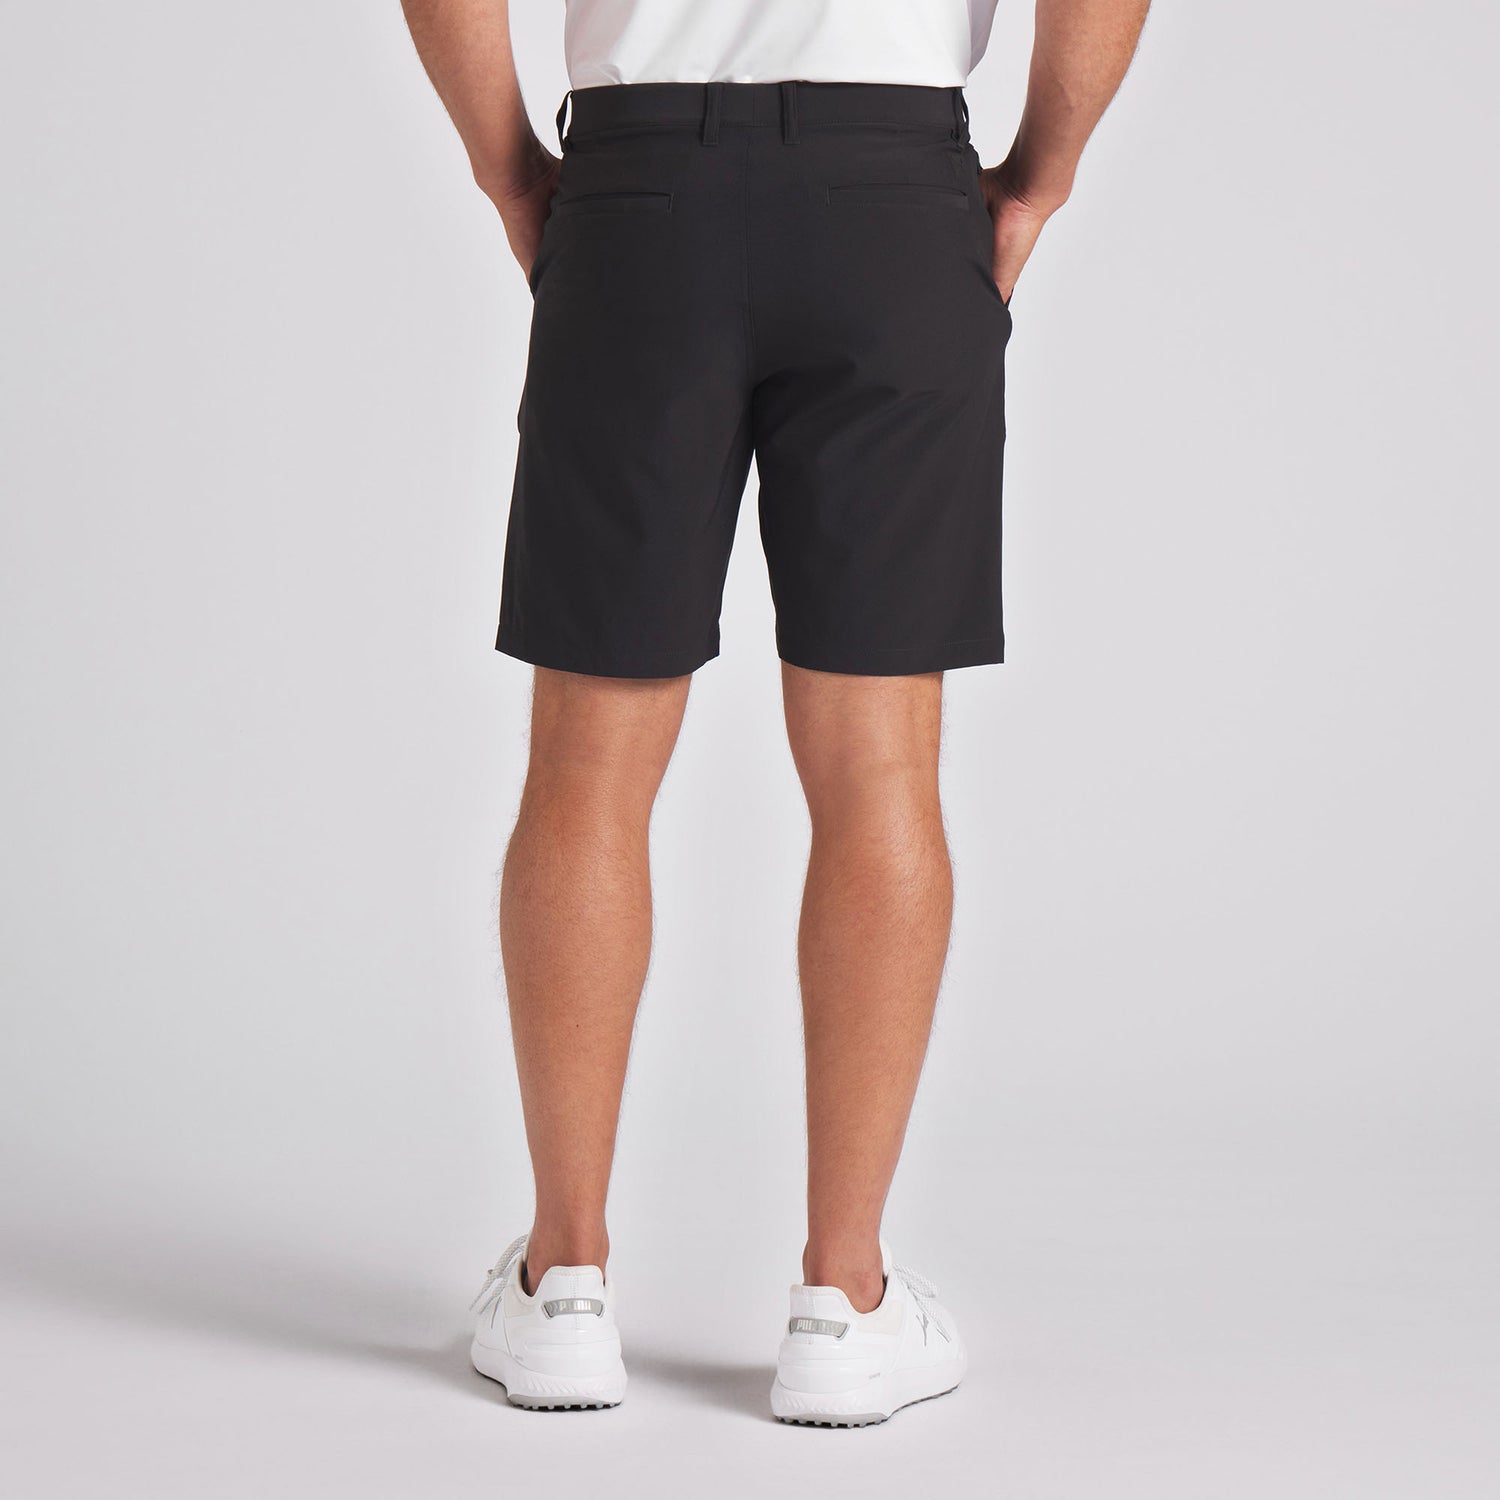 101 South 9 Golf Shorts